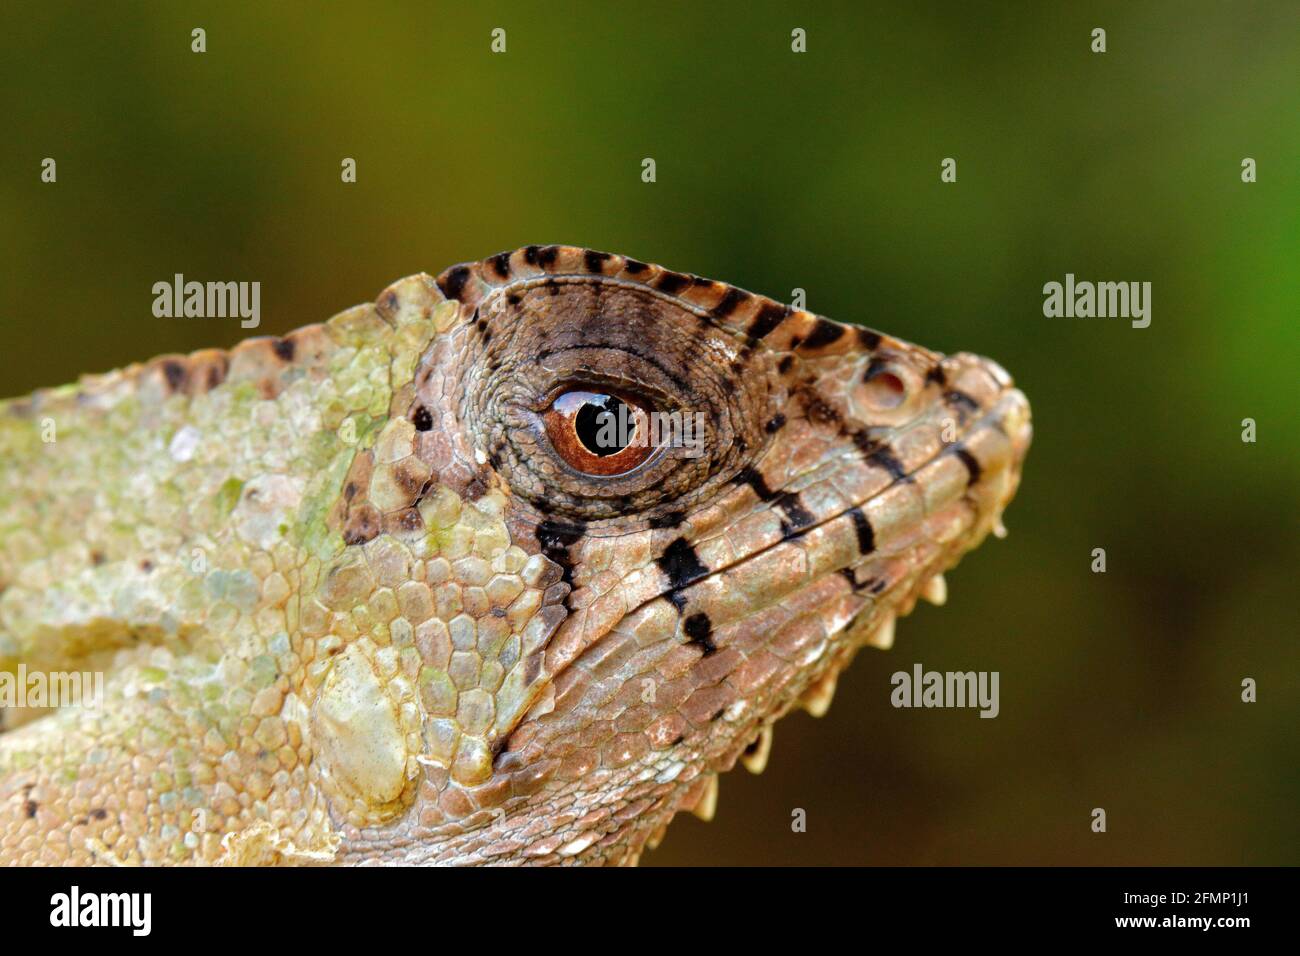 Detail Helmeted basilisk iguana, Corytophanes cristatus, close-up eye. Lizard in the nature habitat, green forest vegetation. Beautiful reptile with l Stock Photo